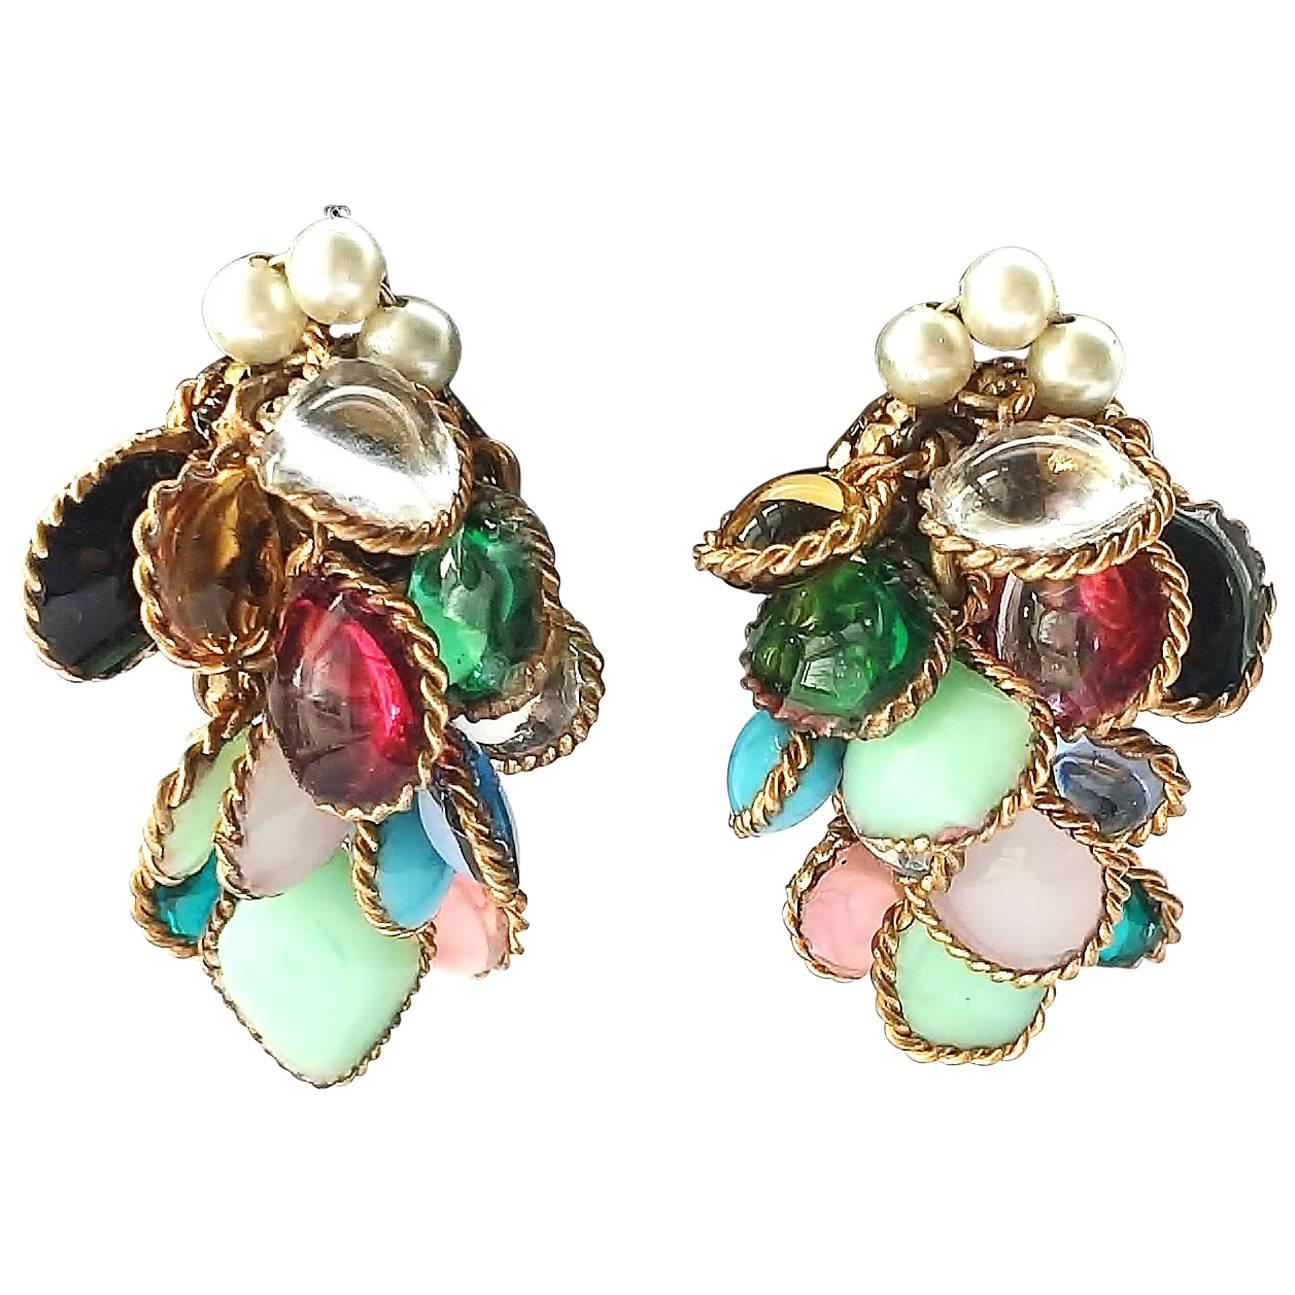 Multi coloured poured glass cluster earrings, Maison Gripoix, att. Chanel 1960s.